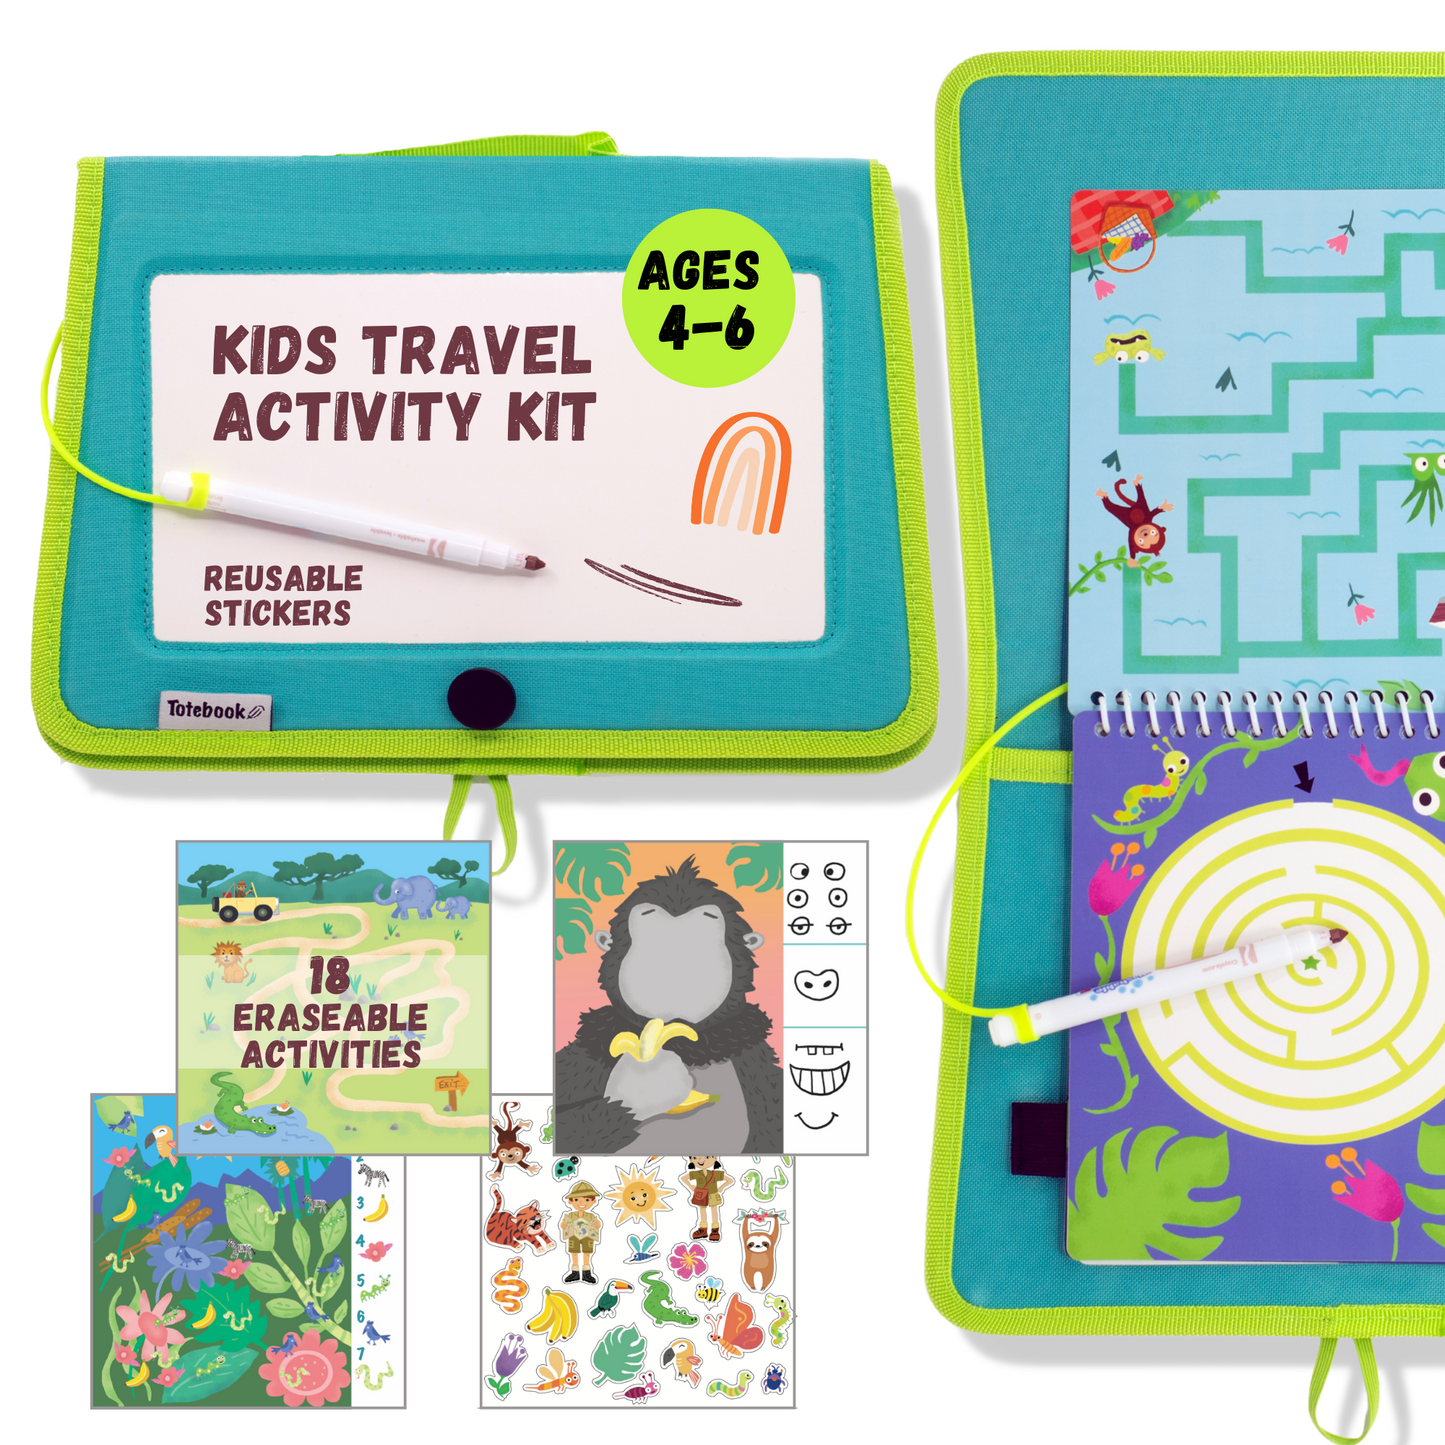 Totebook Kids Dry Erase Activity Kit